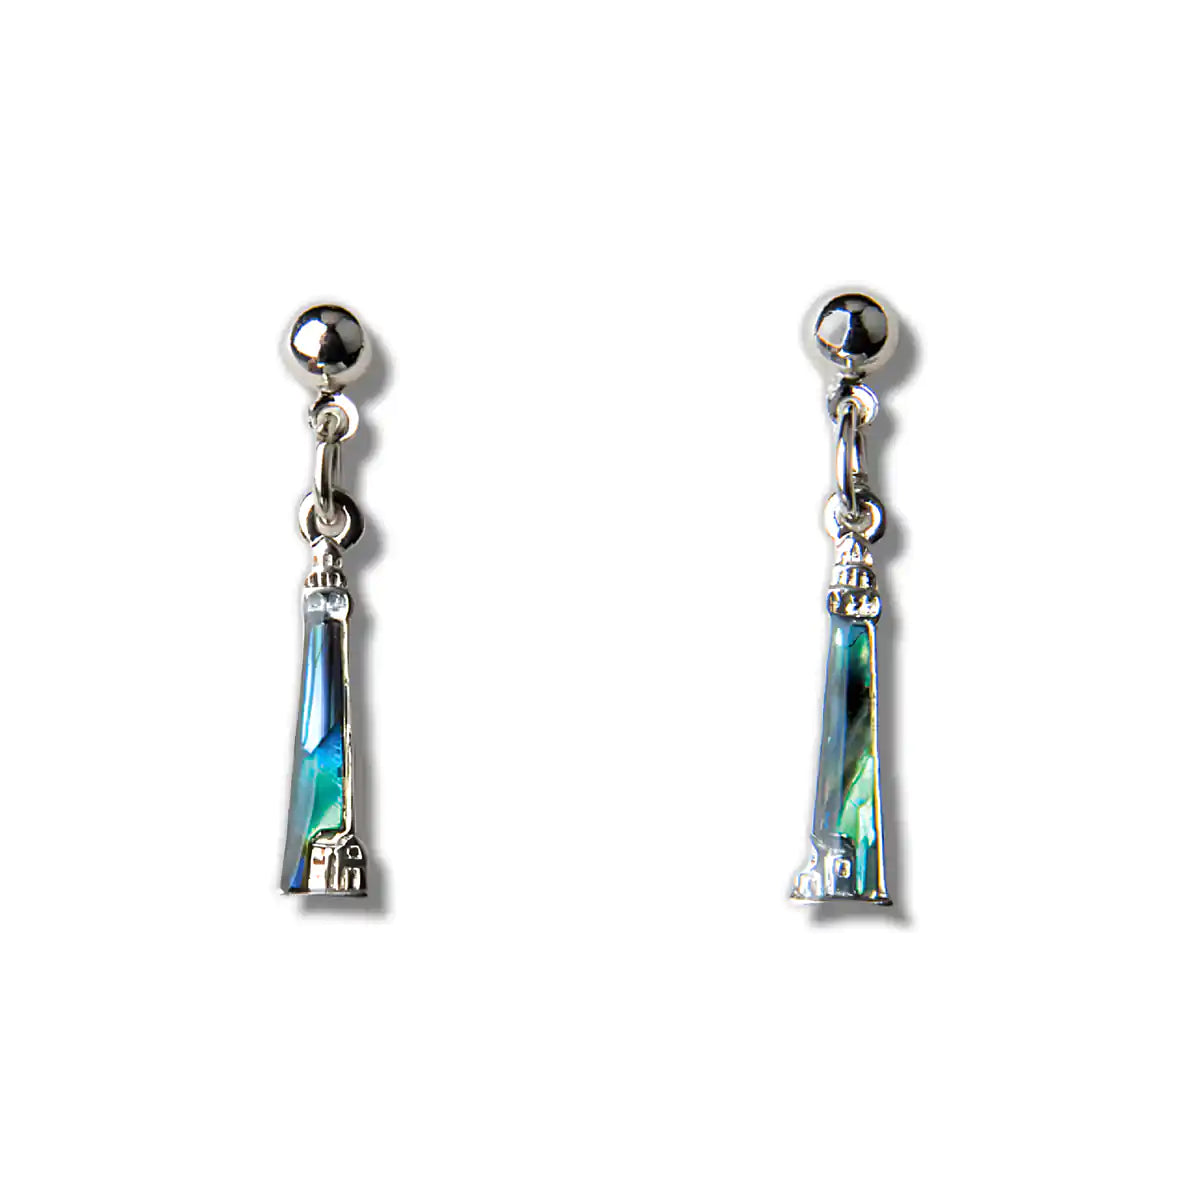 Glacier pearle lighthouse earrings